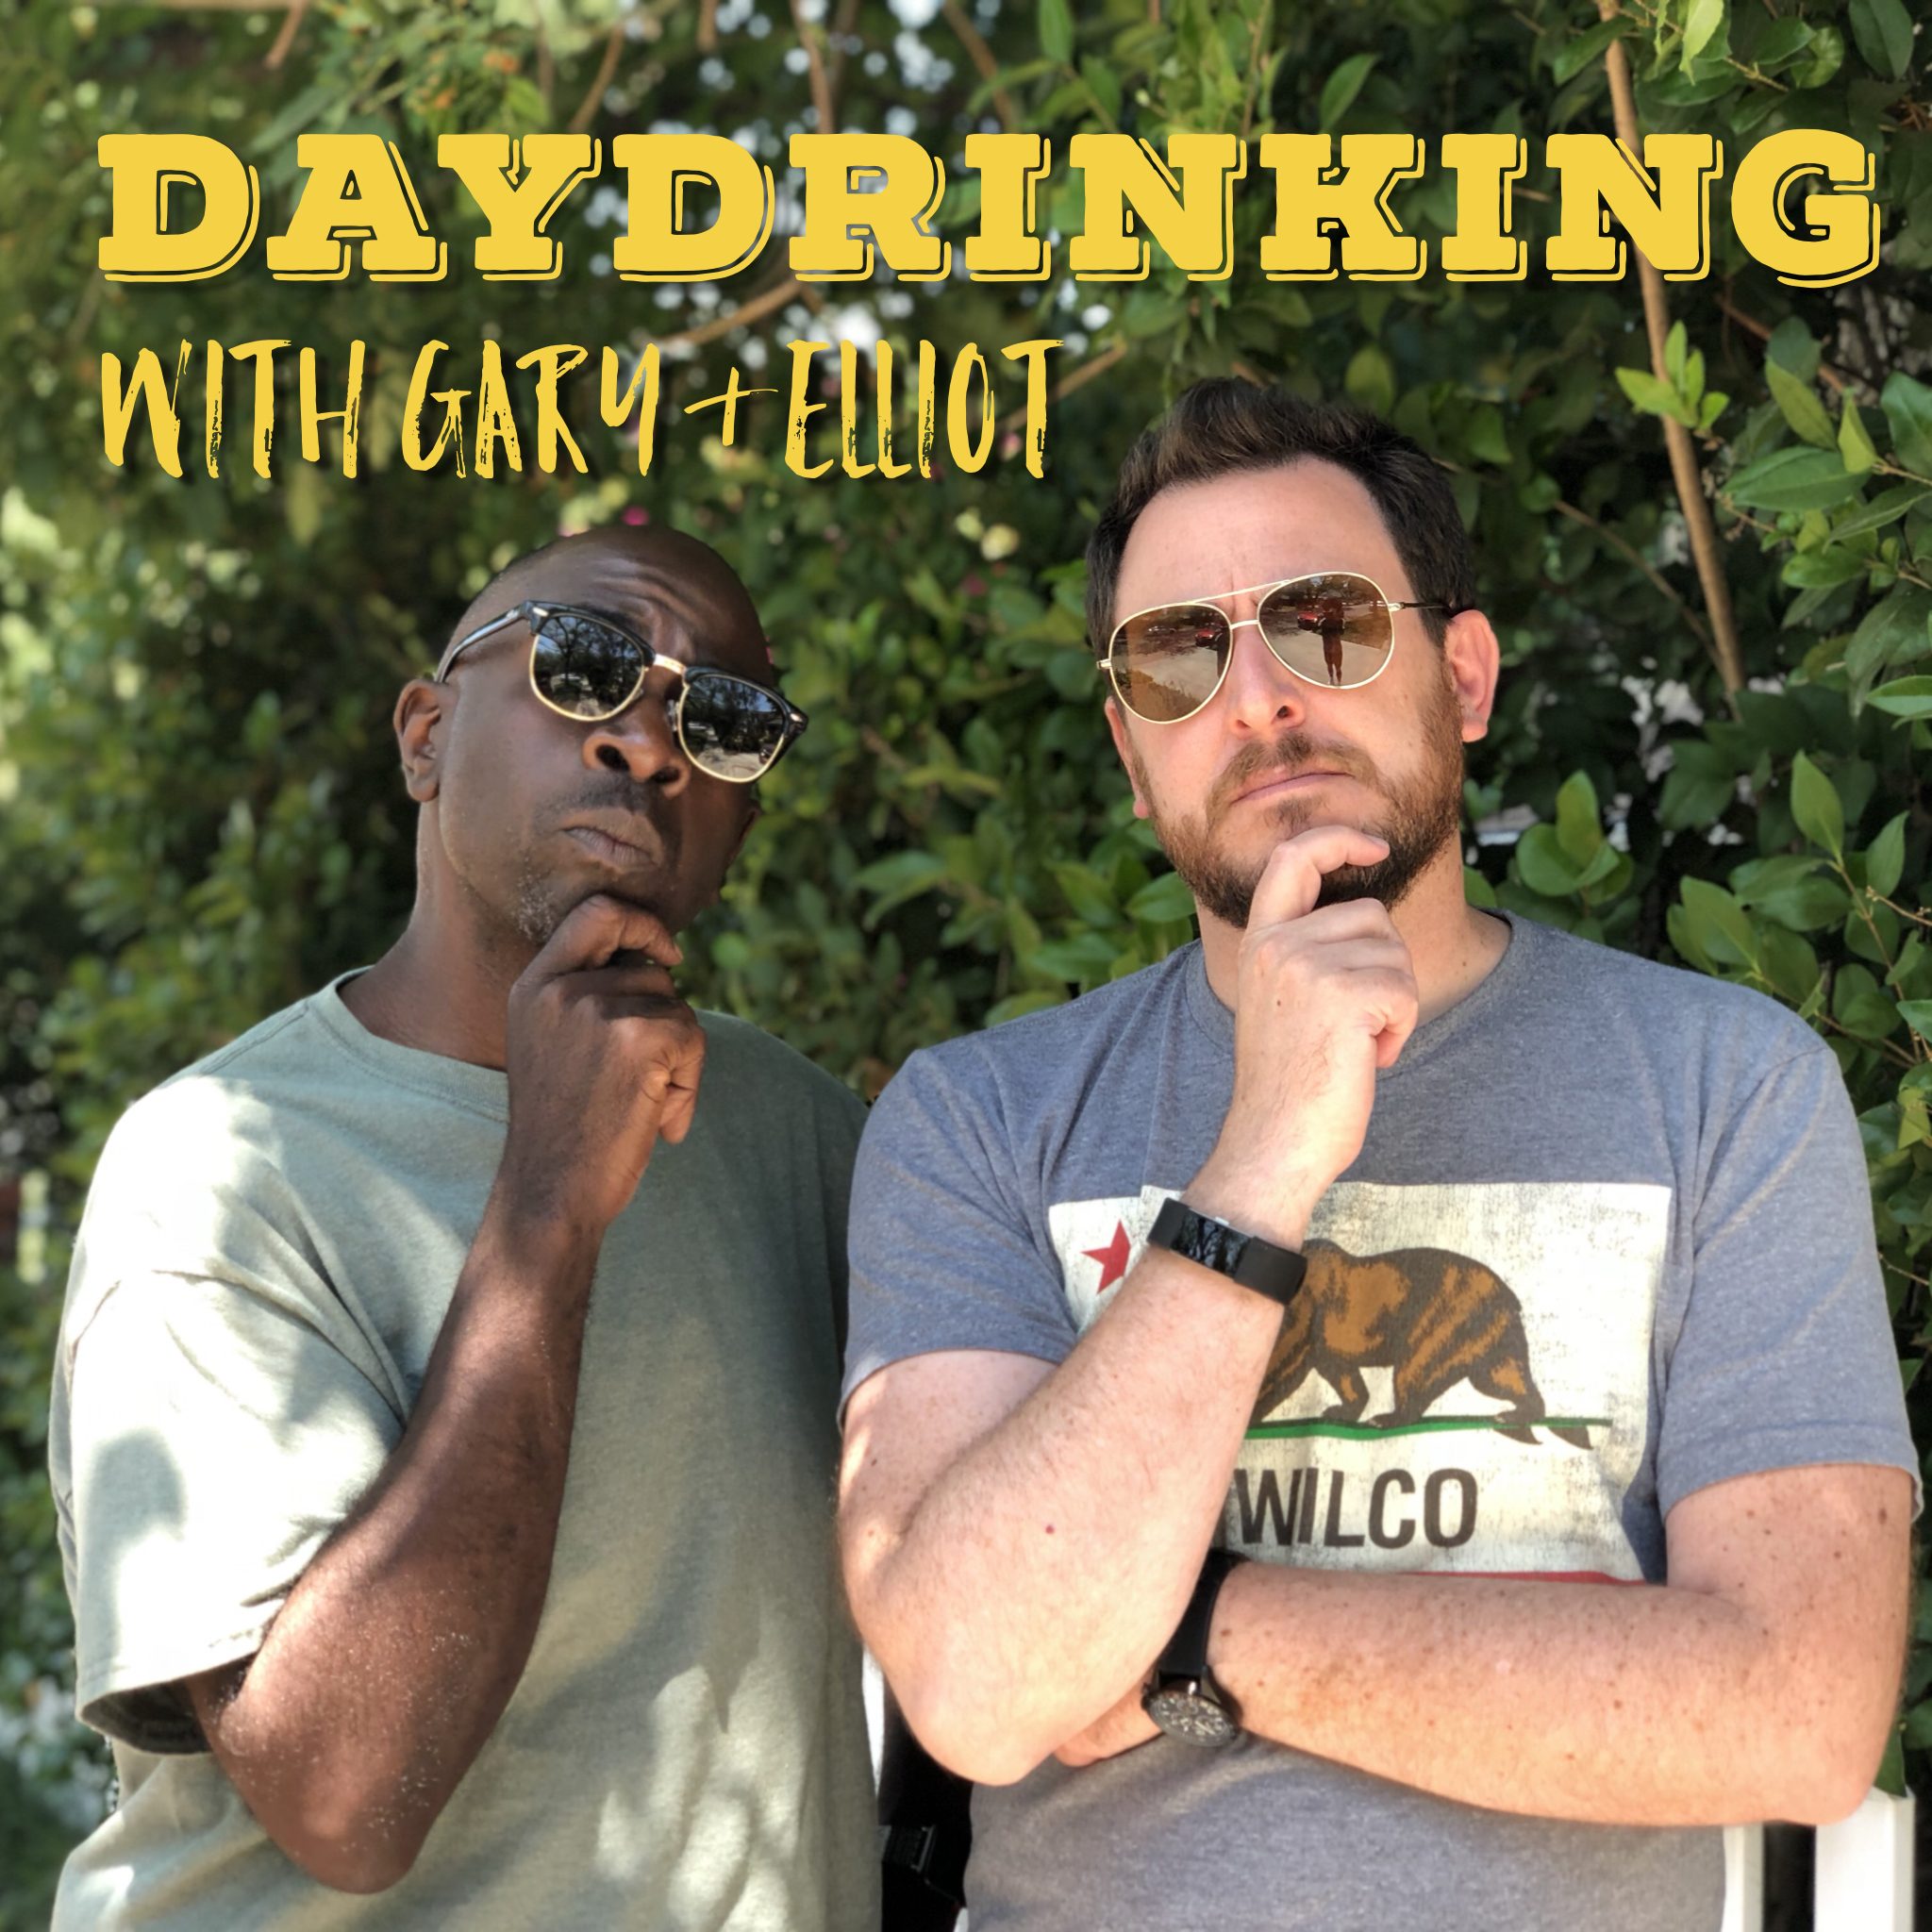 Daydrinking with Gary & Elliot